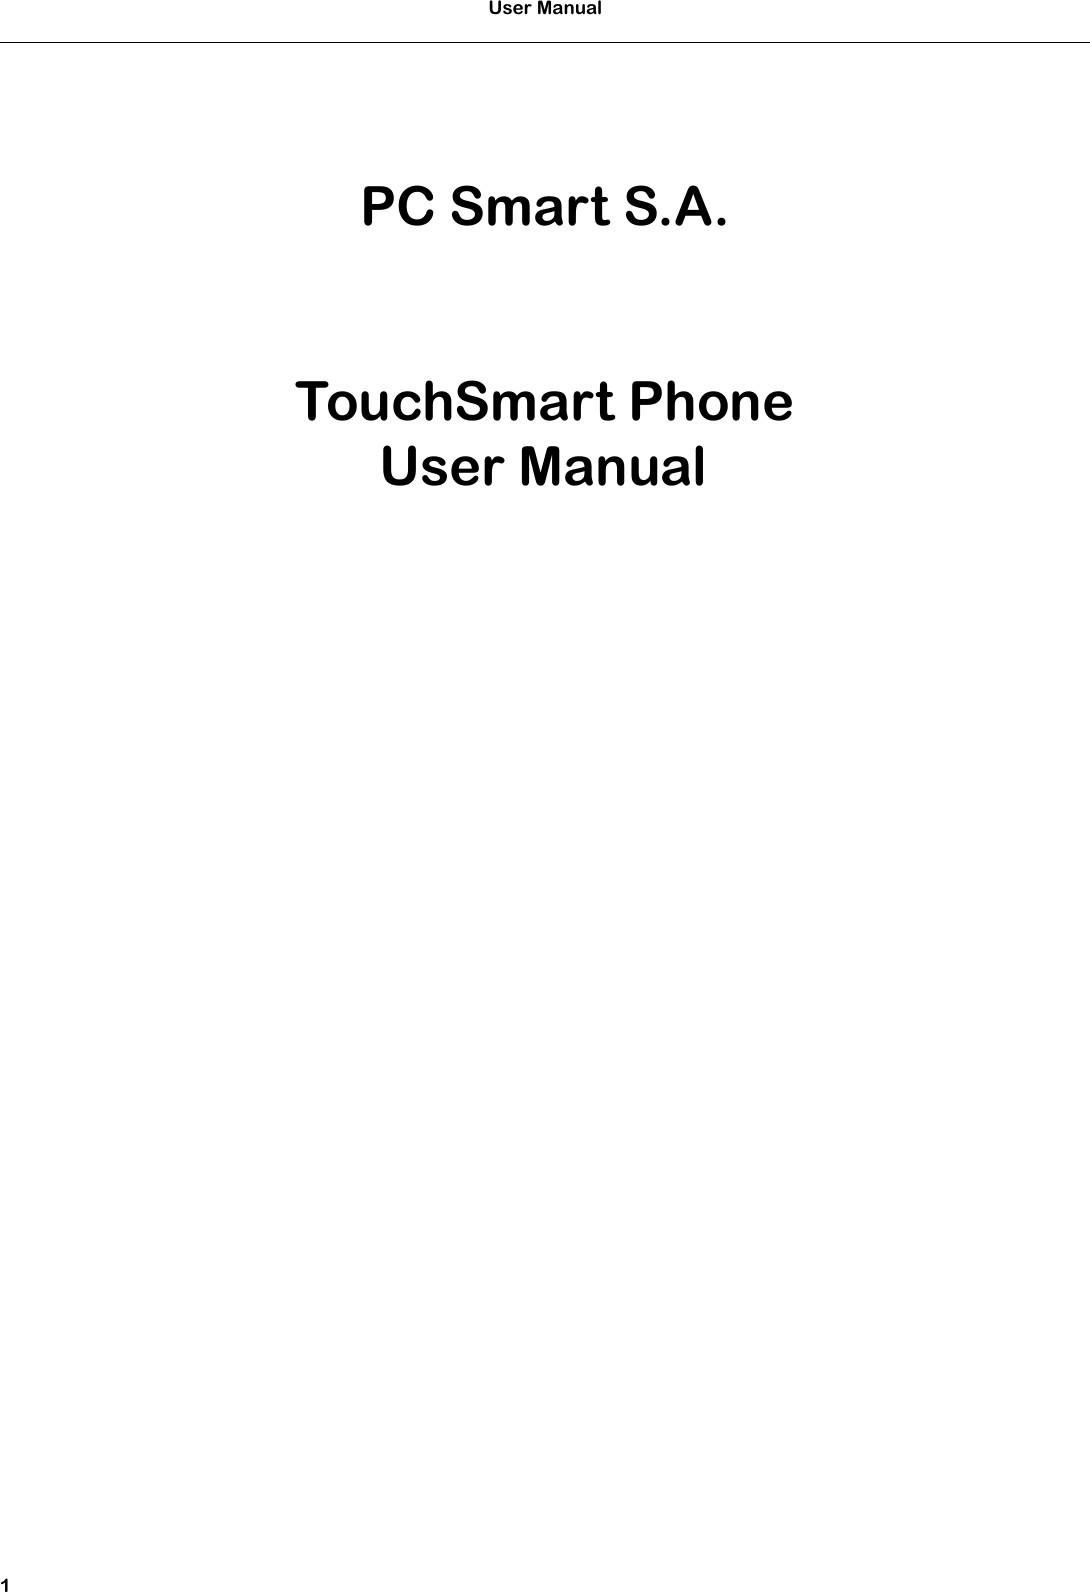 User Manual1PC Smart S.A.TouchSmart PhoneUser Manual